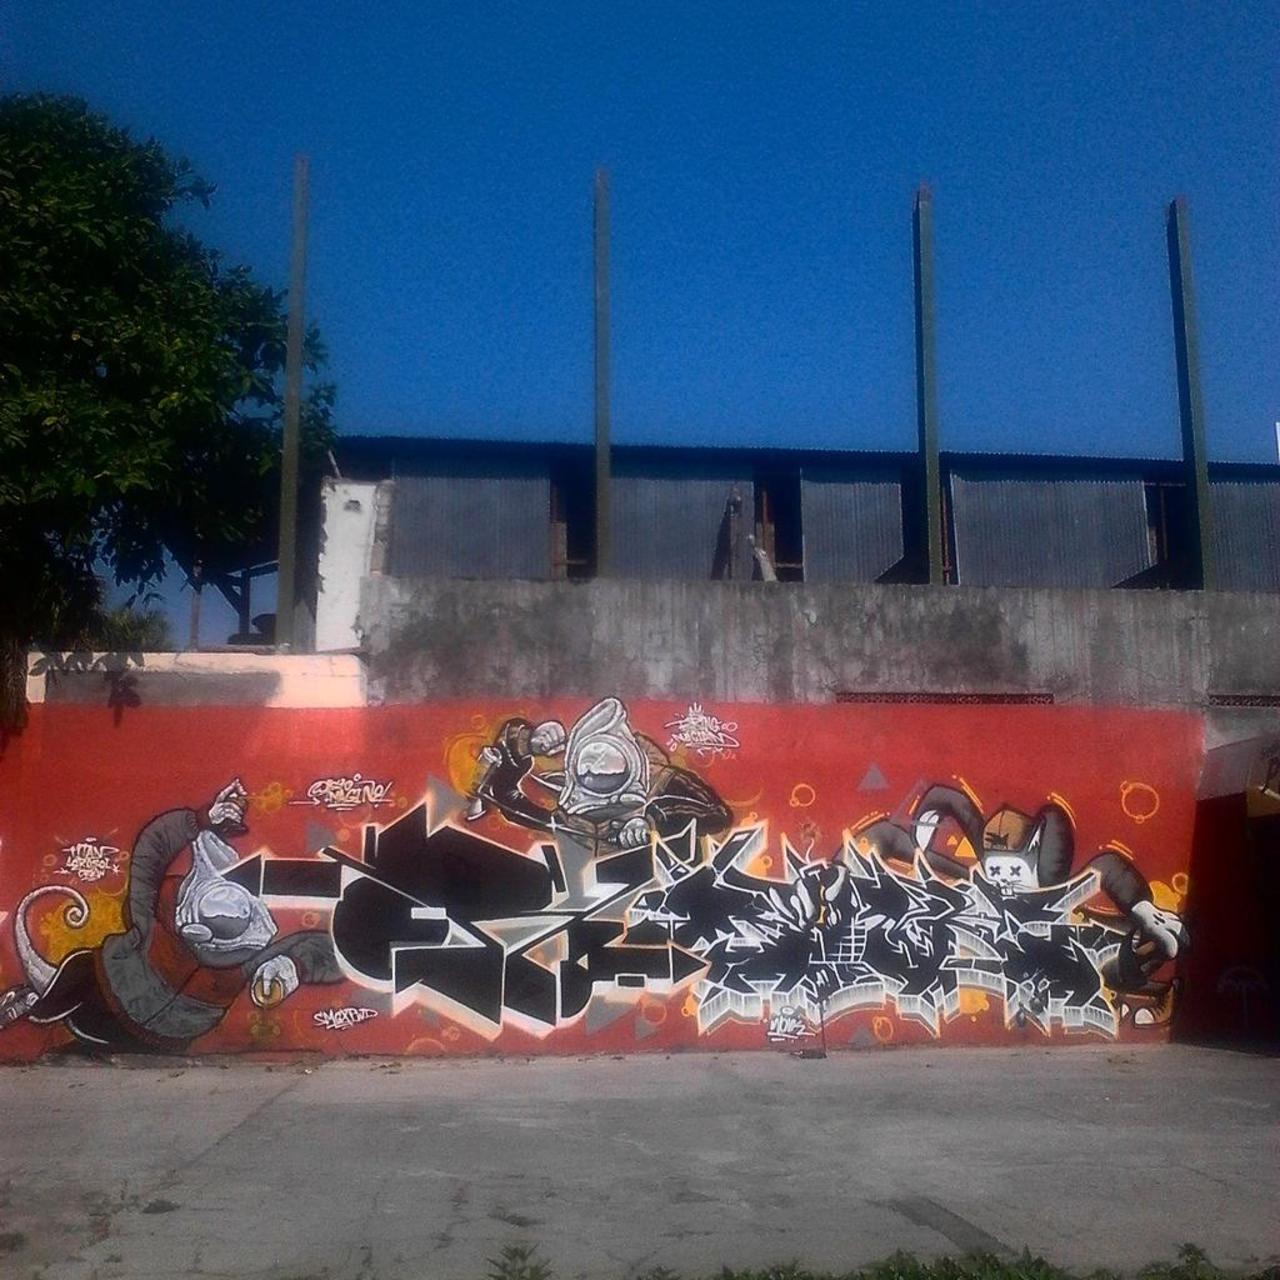 RT @BringNoClan: Selamat pagi! Bring No Clan x 0292Klan feat STO24 KUNK INONK03 DHOEL! #graffiti #streetart  . Cc: @I_S_A_D @INA_Walls http://t.co/jqs5jgy2fs